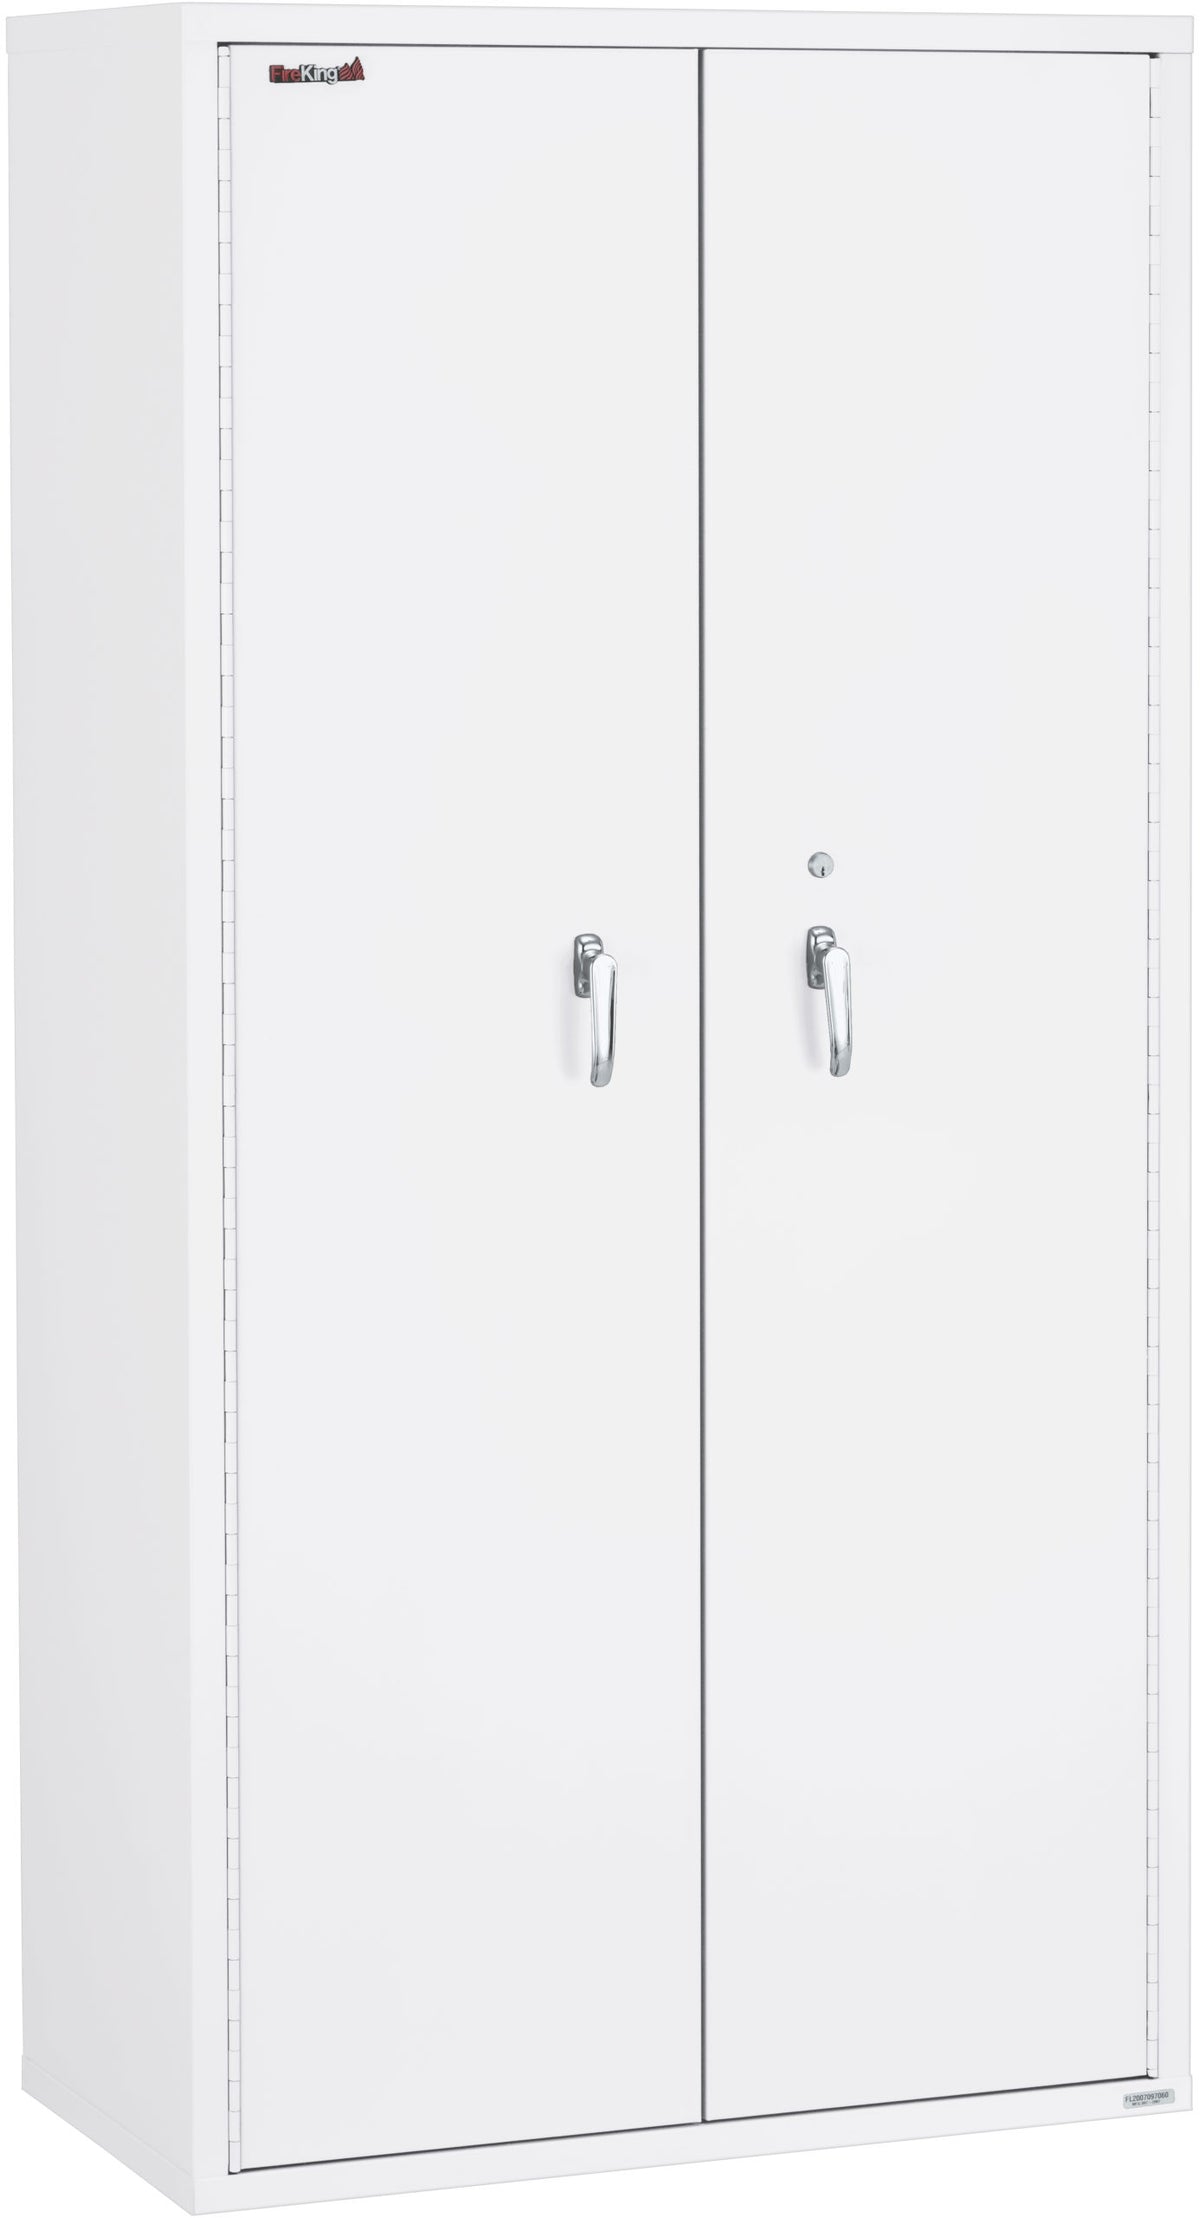 FireKing CF7236-D Secure Storage Cabinet Arctic White Closed